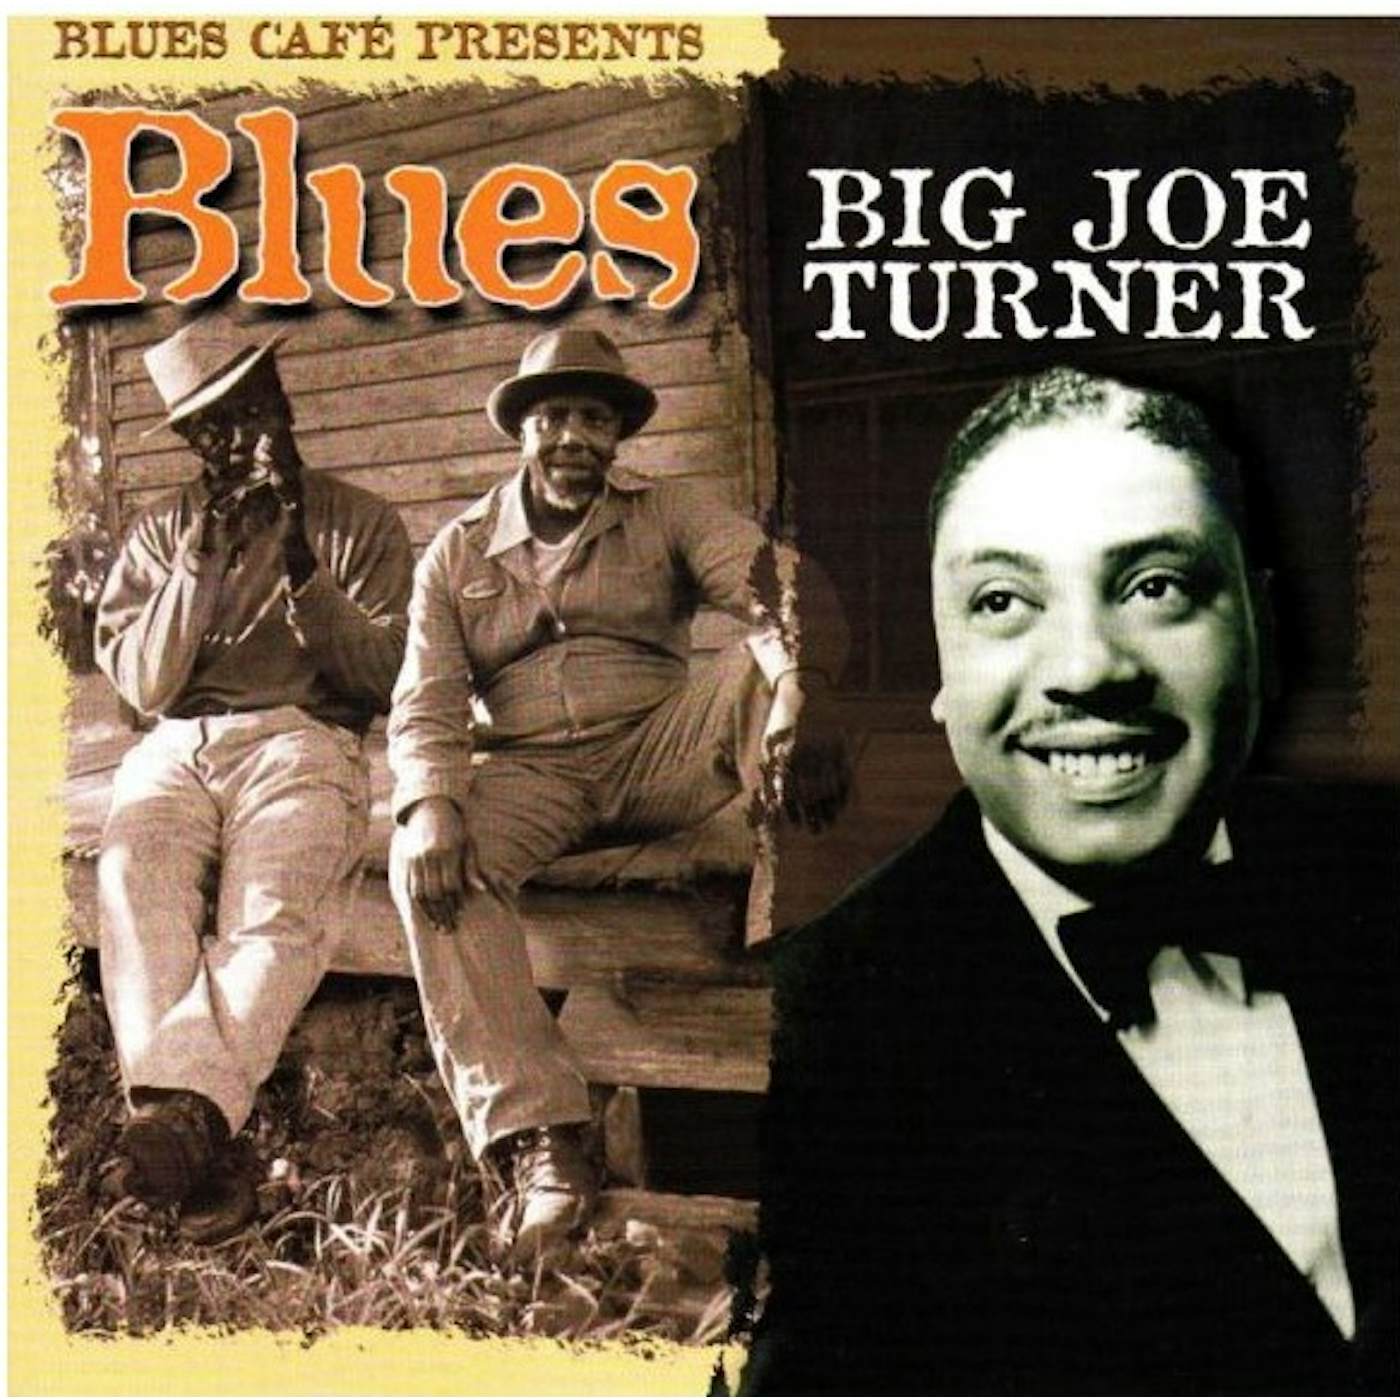 BLUES CAFE PRESENTS BIG JOE TURNER CD